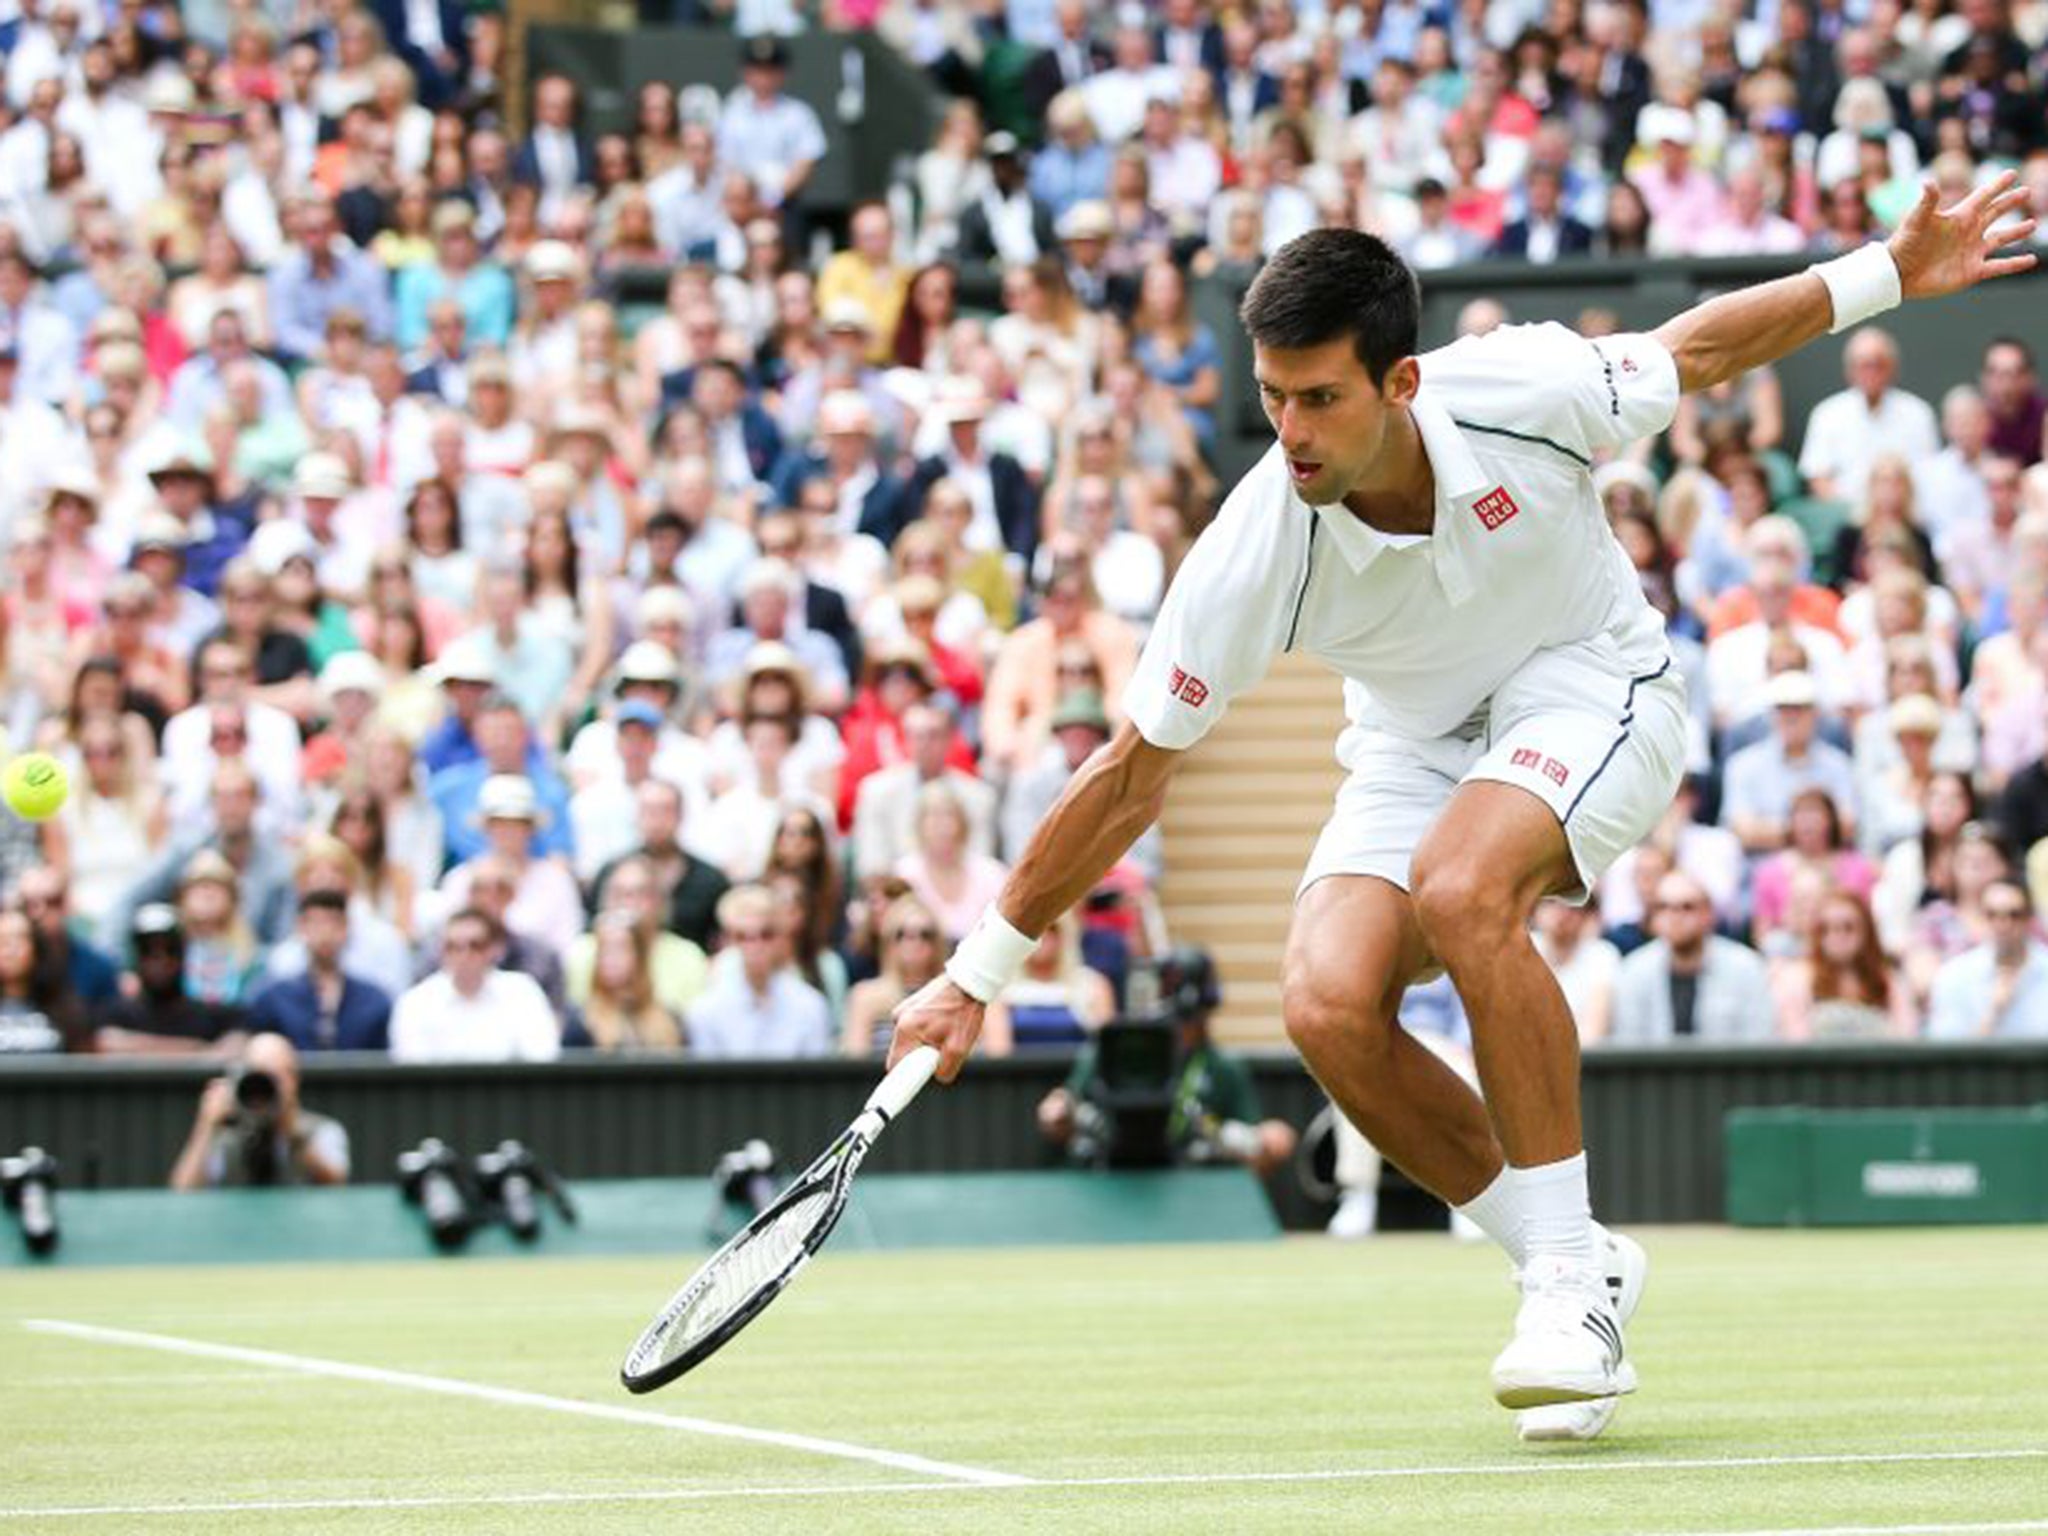 Novak Djokovic reaches low to make a return against Roger Federer